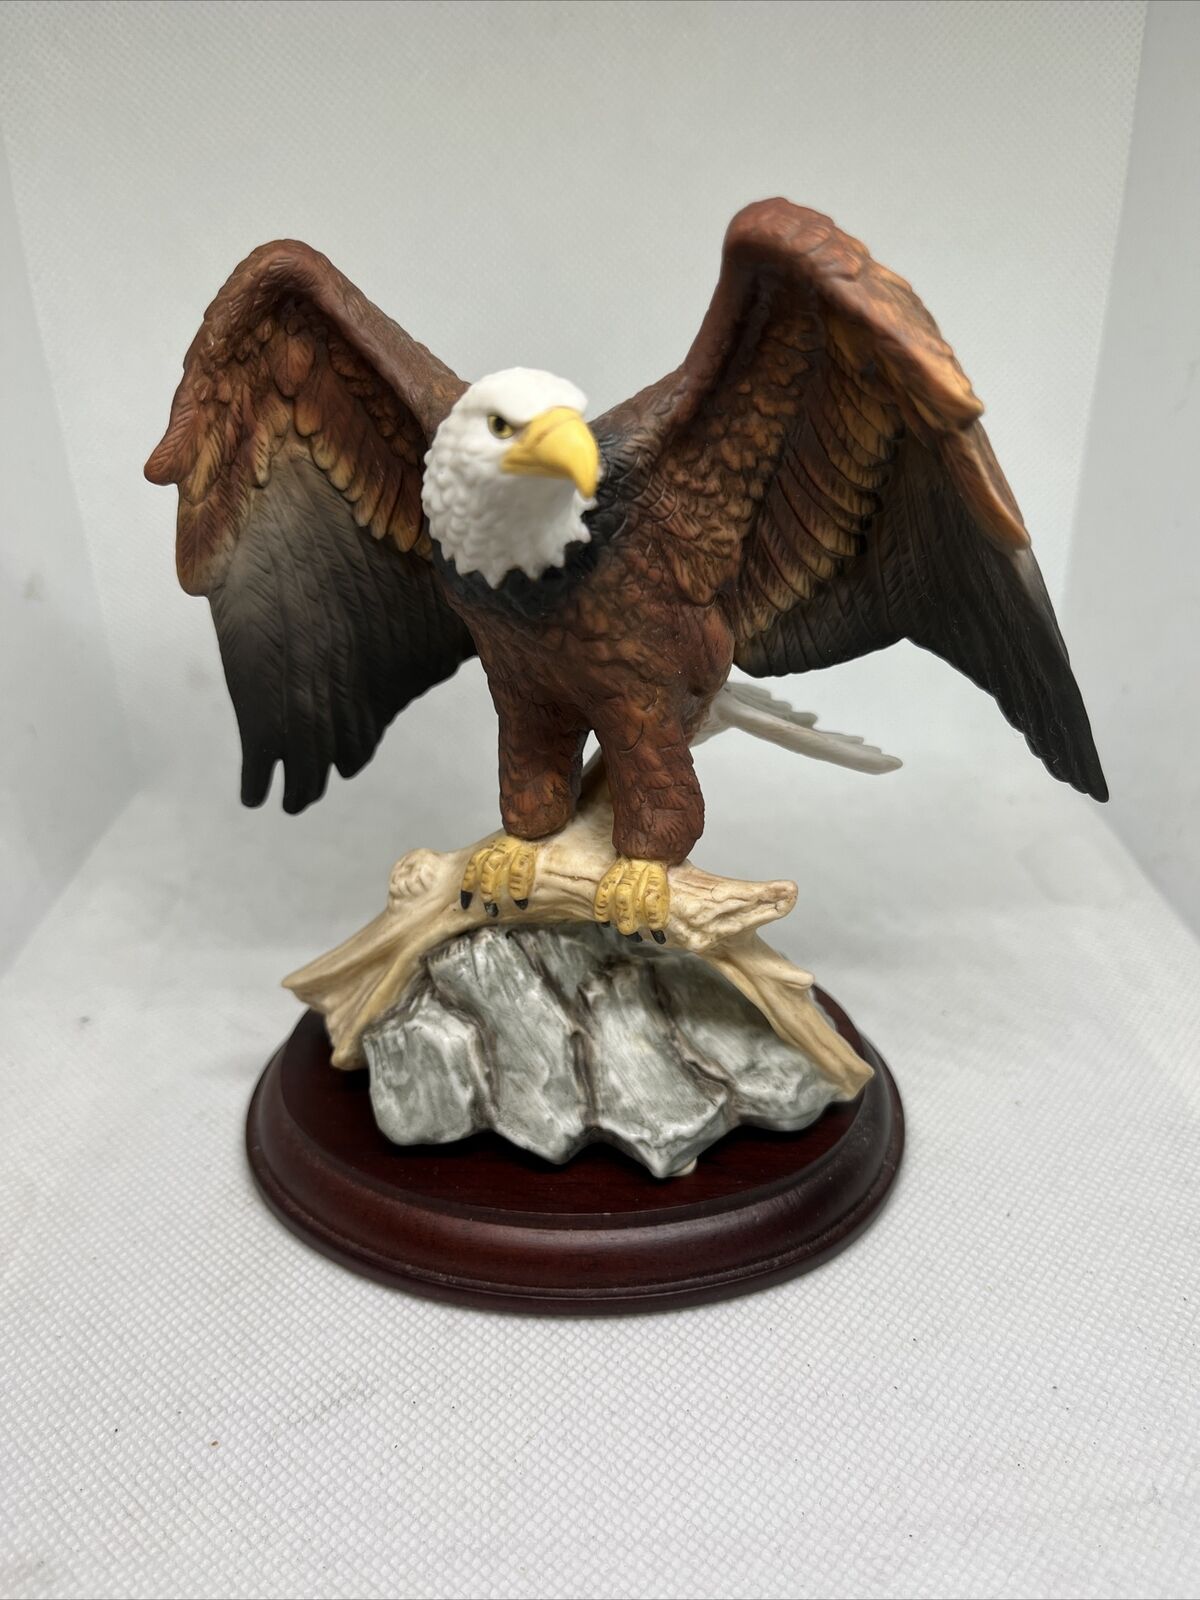 America Eagle fine Porcelain. 5 x 5 inches. 1995